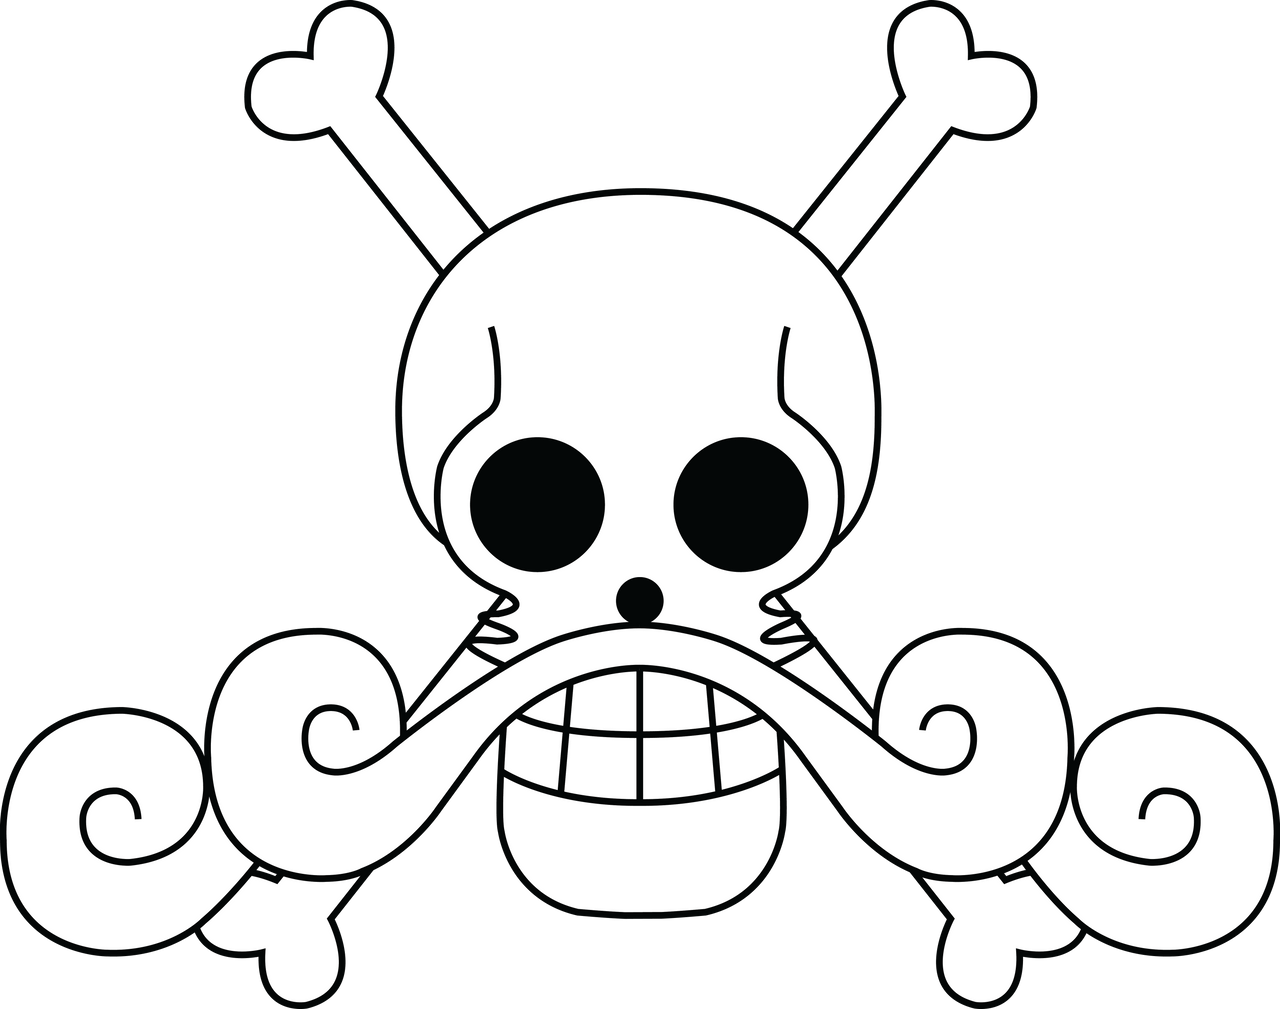 roger-pirates-flag-by-alterax-on-deviantart